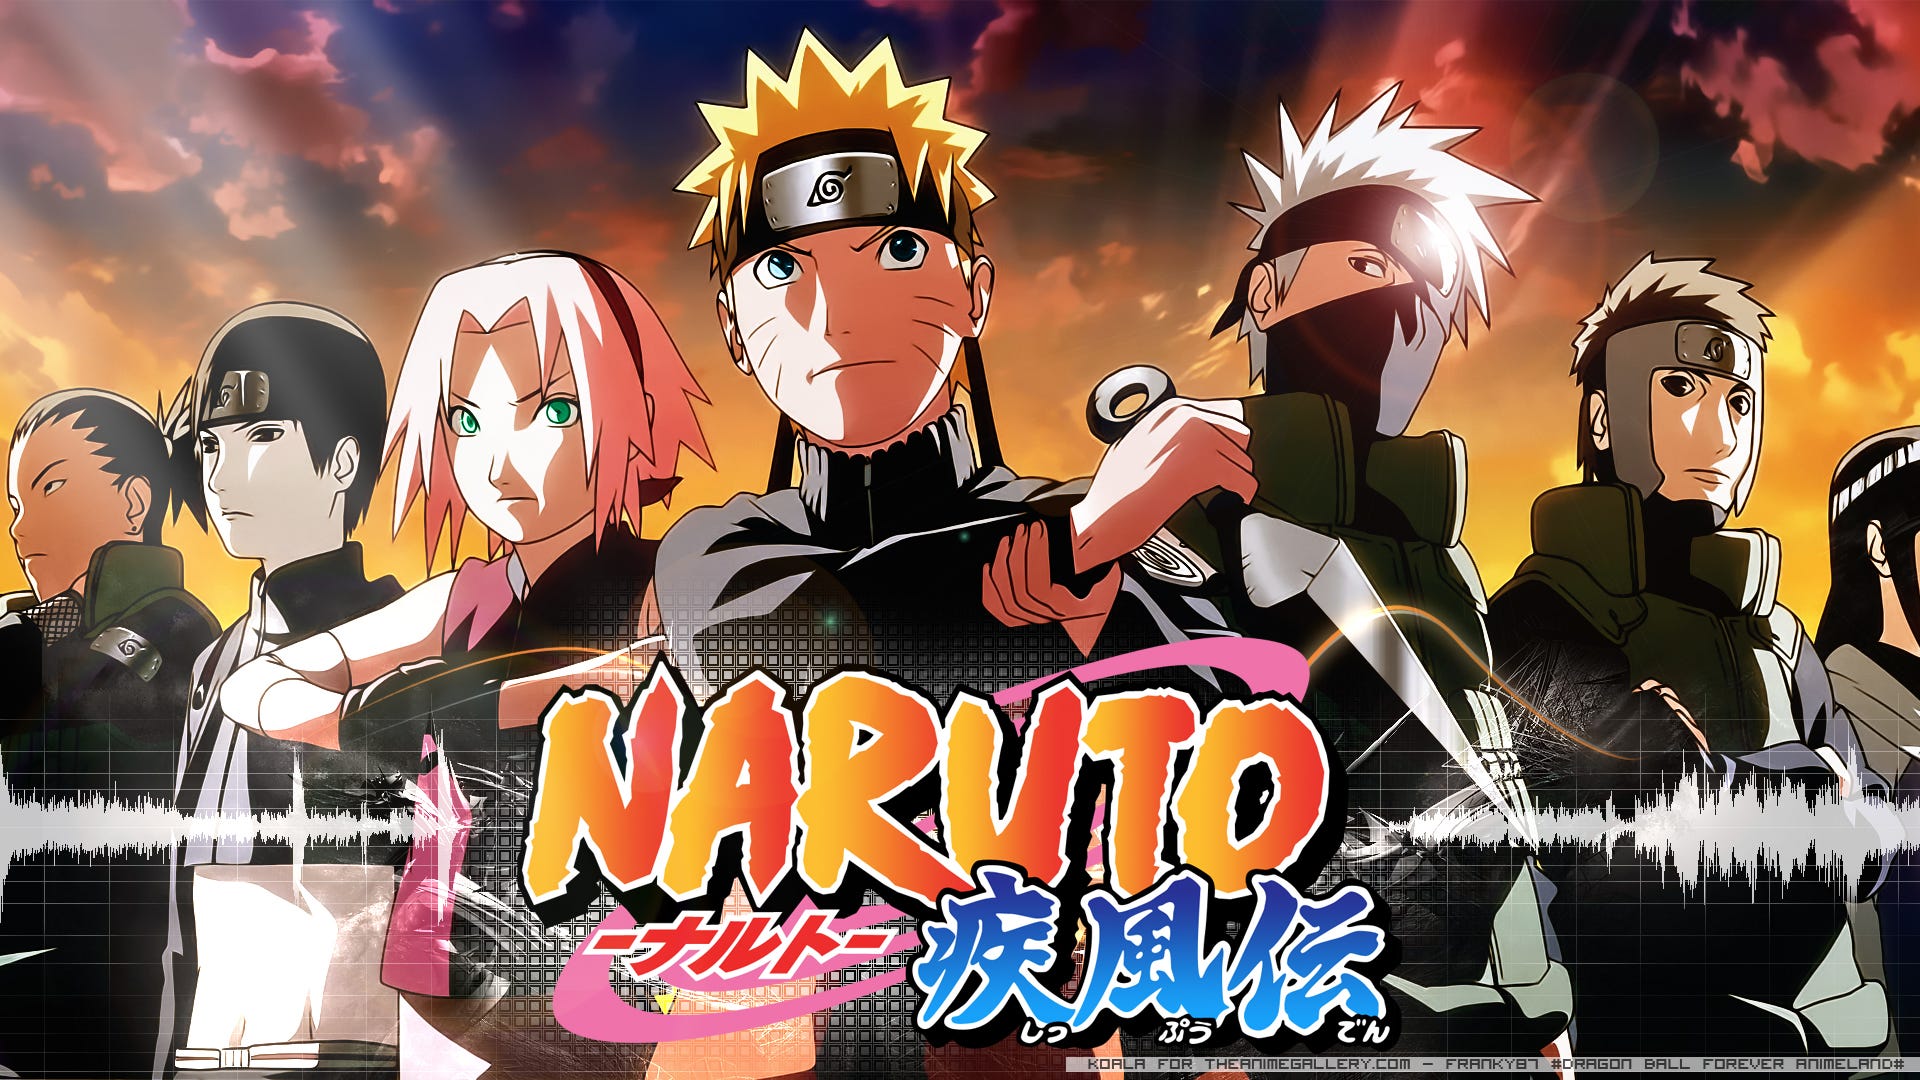 Assista Naruto - Assista séries